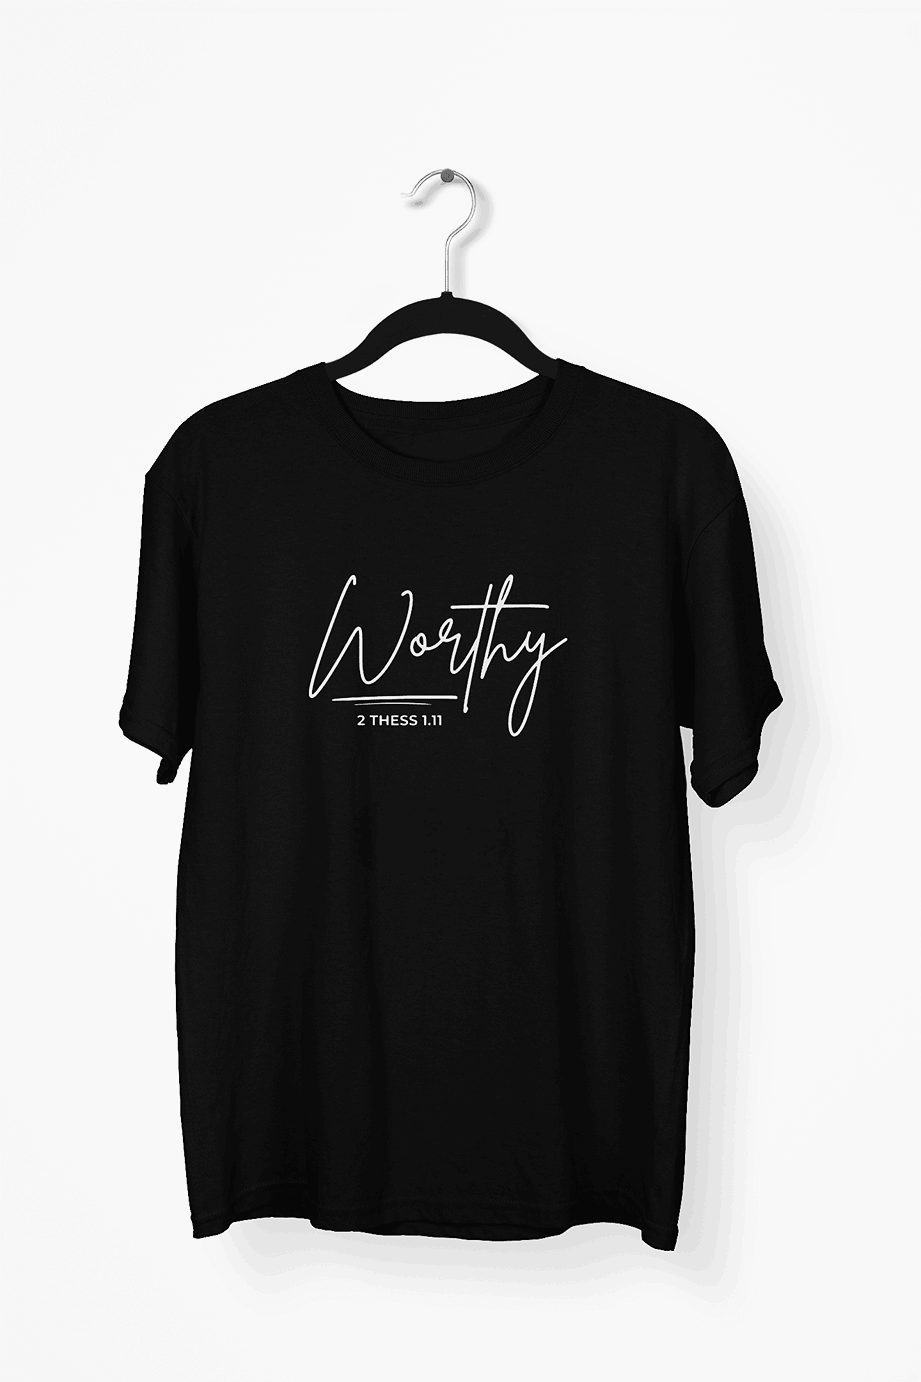 Worthy - Premium Christian T-Shirt